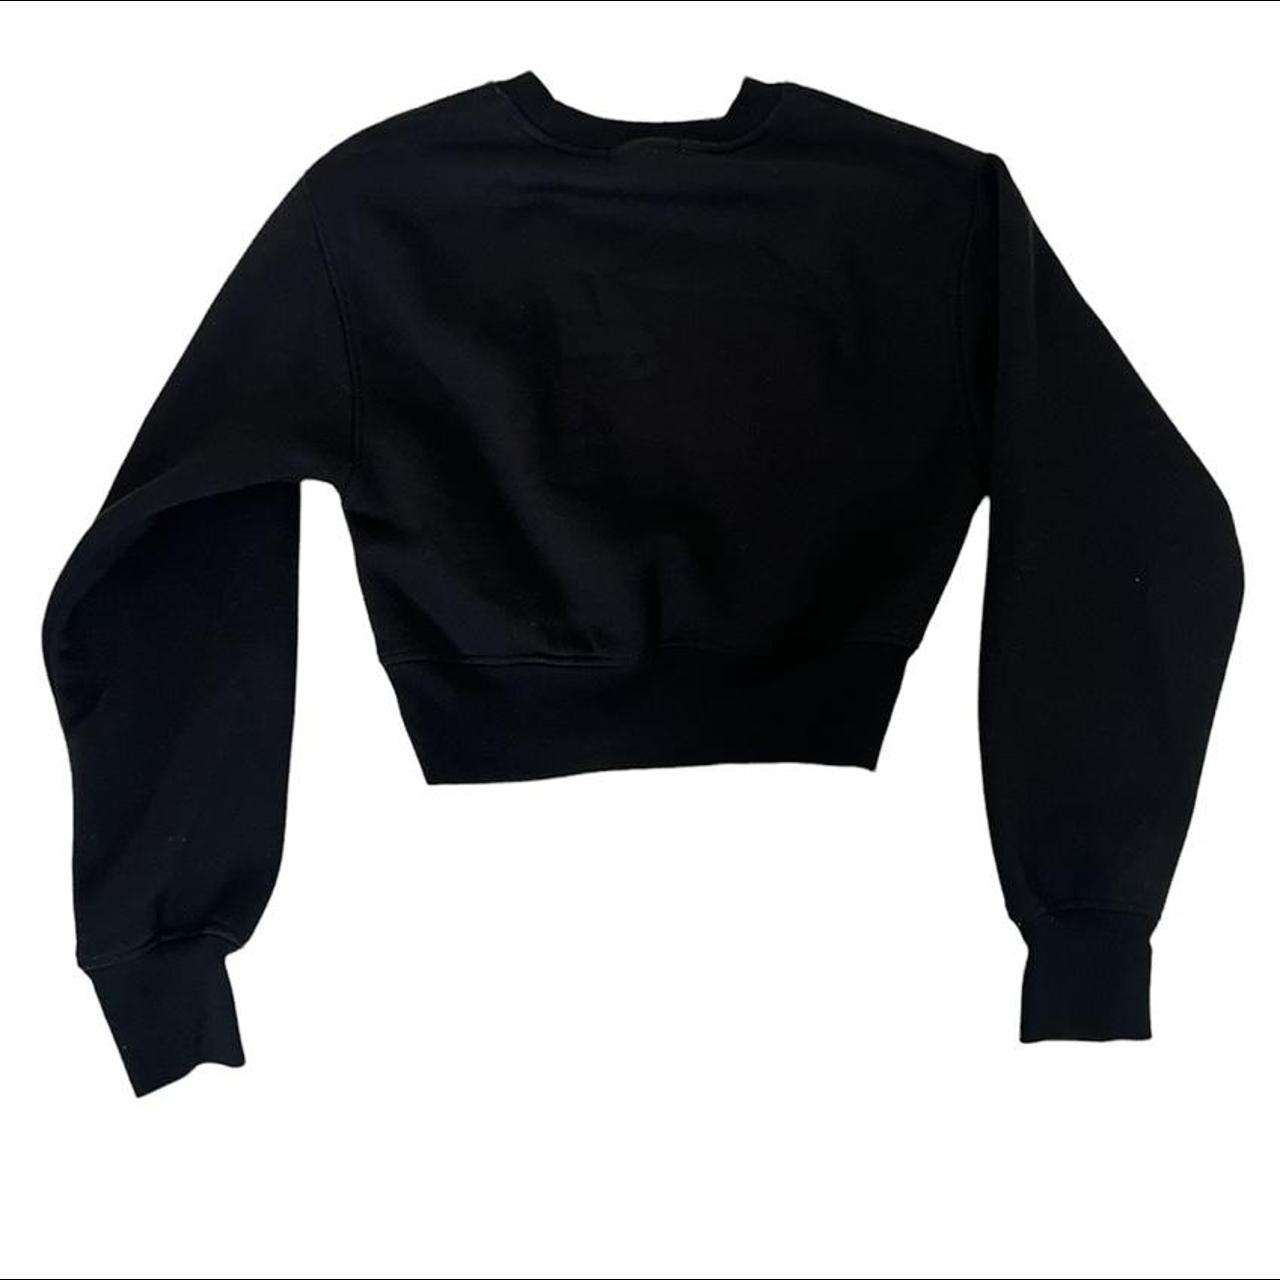 Forever 21 Women's Black Sweatshirt (2)